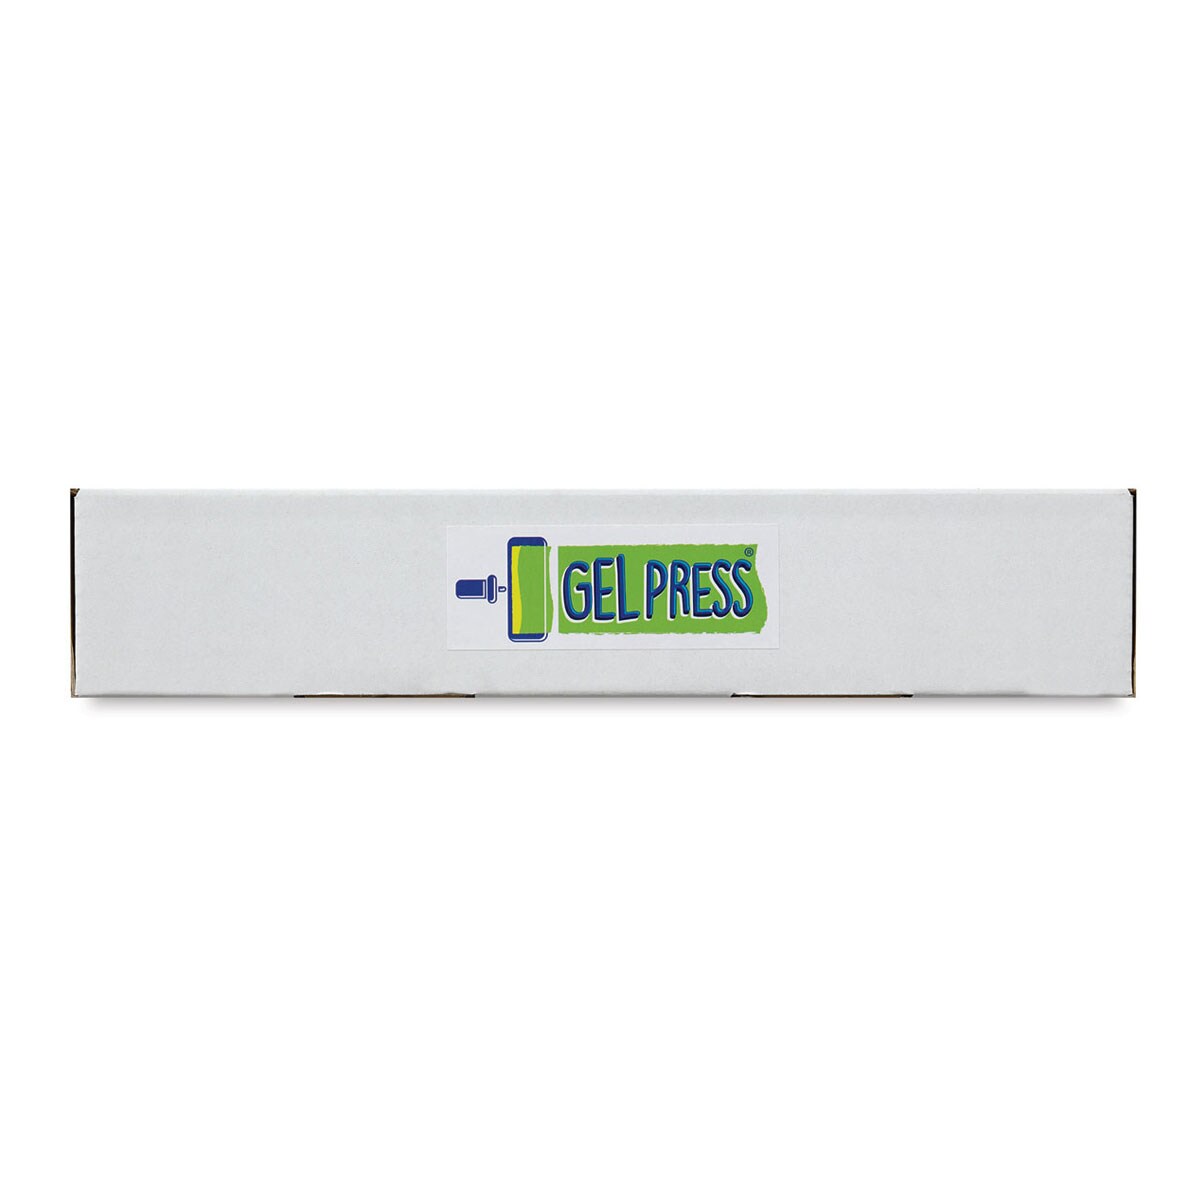 Gel Press Printing Plate - Class Pack, Set of 12